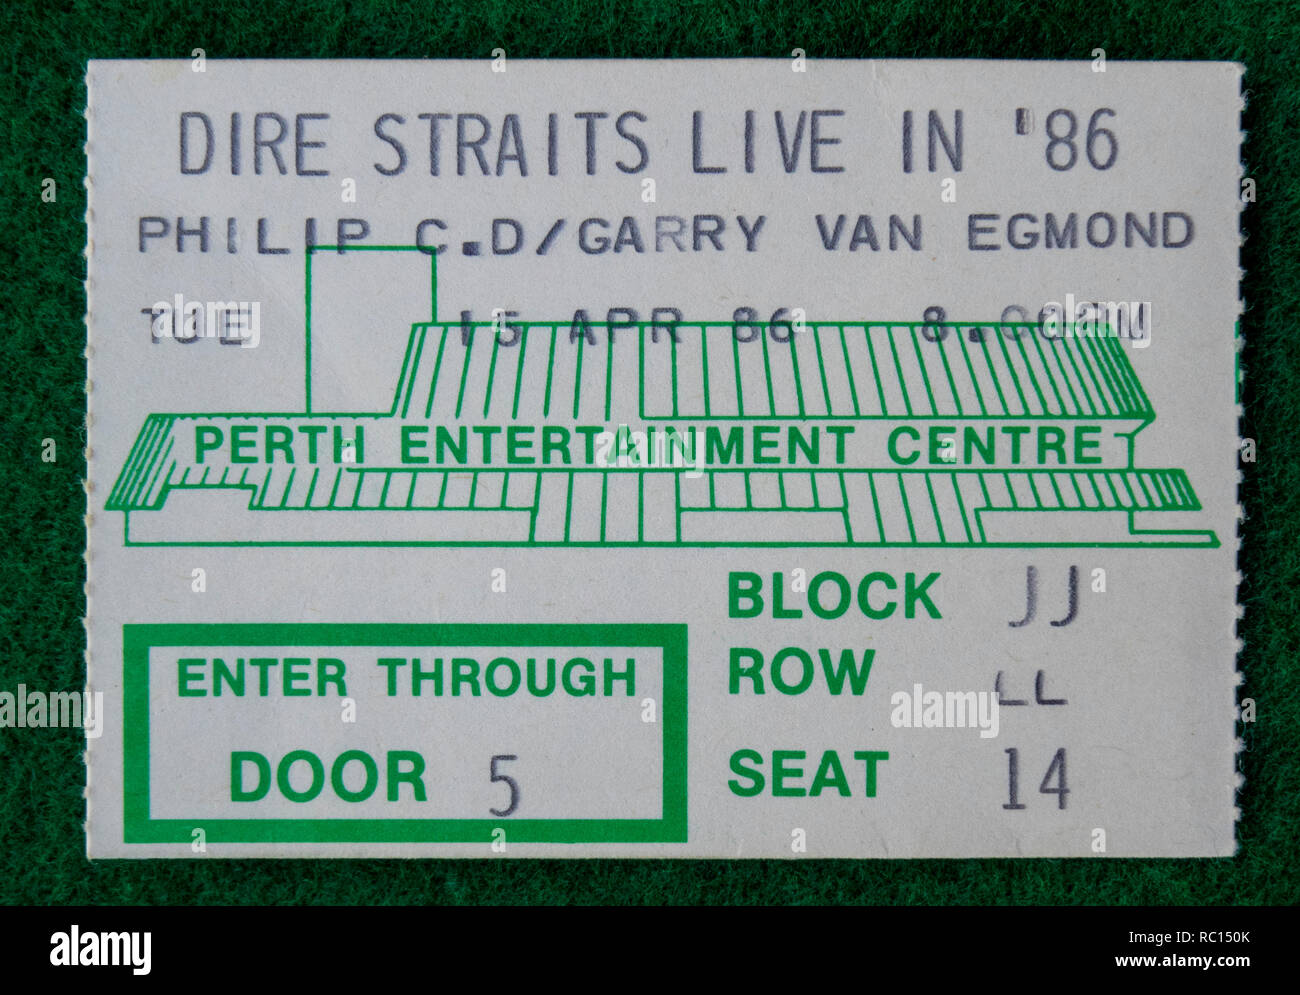 Ticket for Dire Straits concert at Perth Entertainment Centre in 1986 WA Australia. Stock Photo